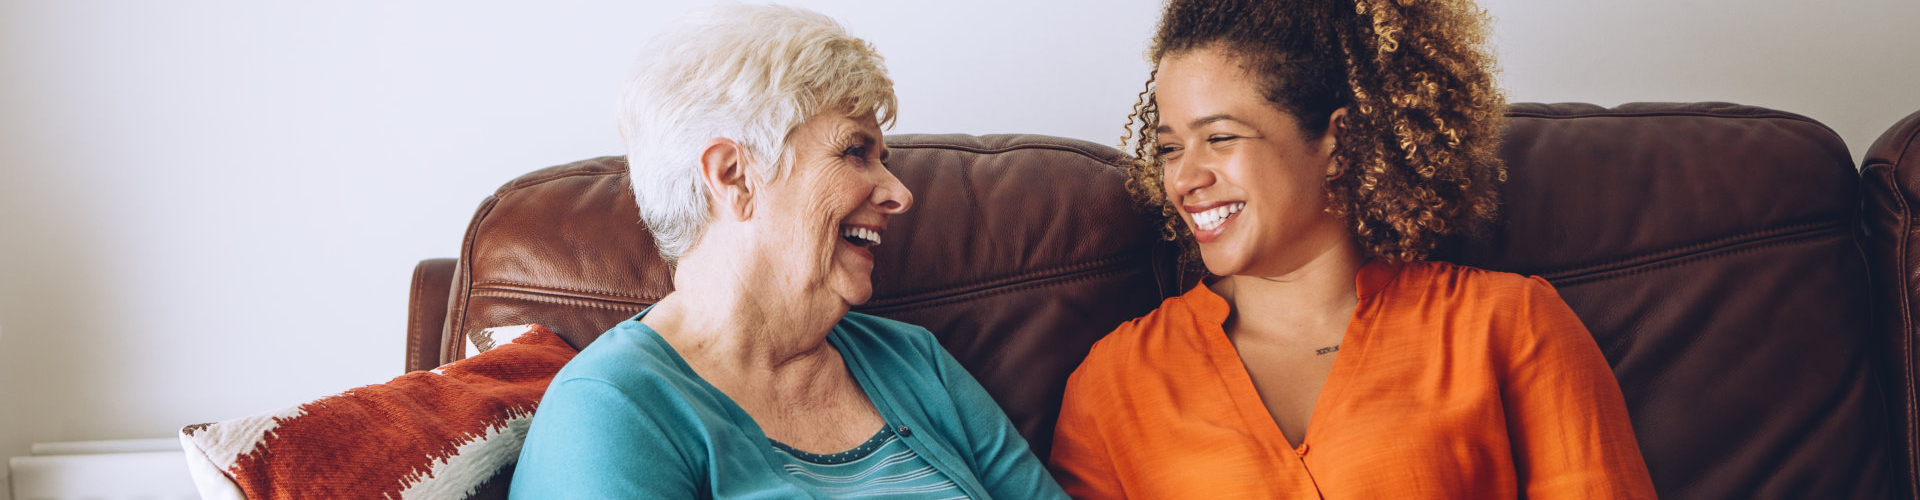 Senior women enjoying a laugh with her caretaker